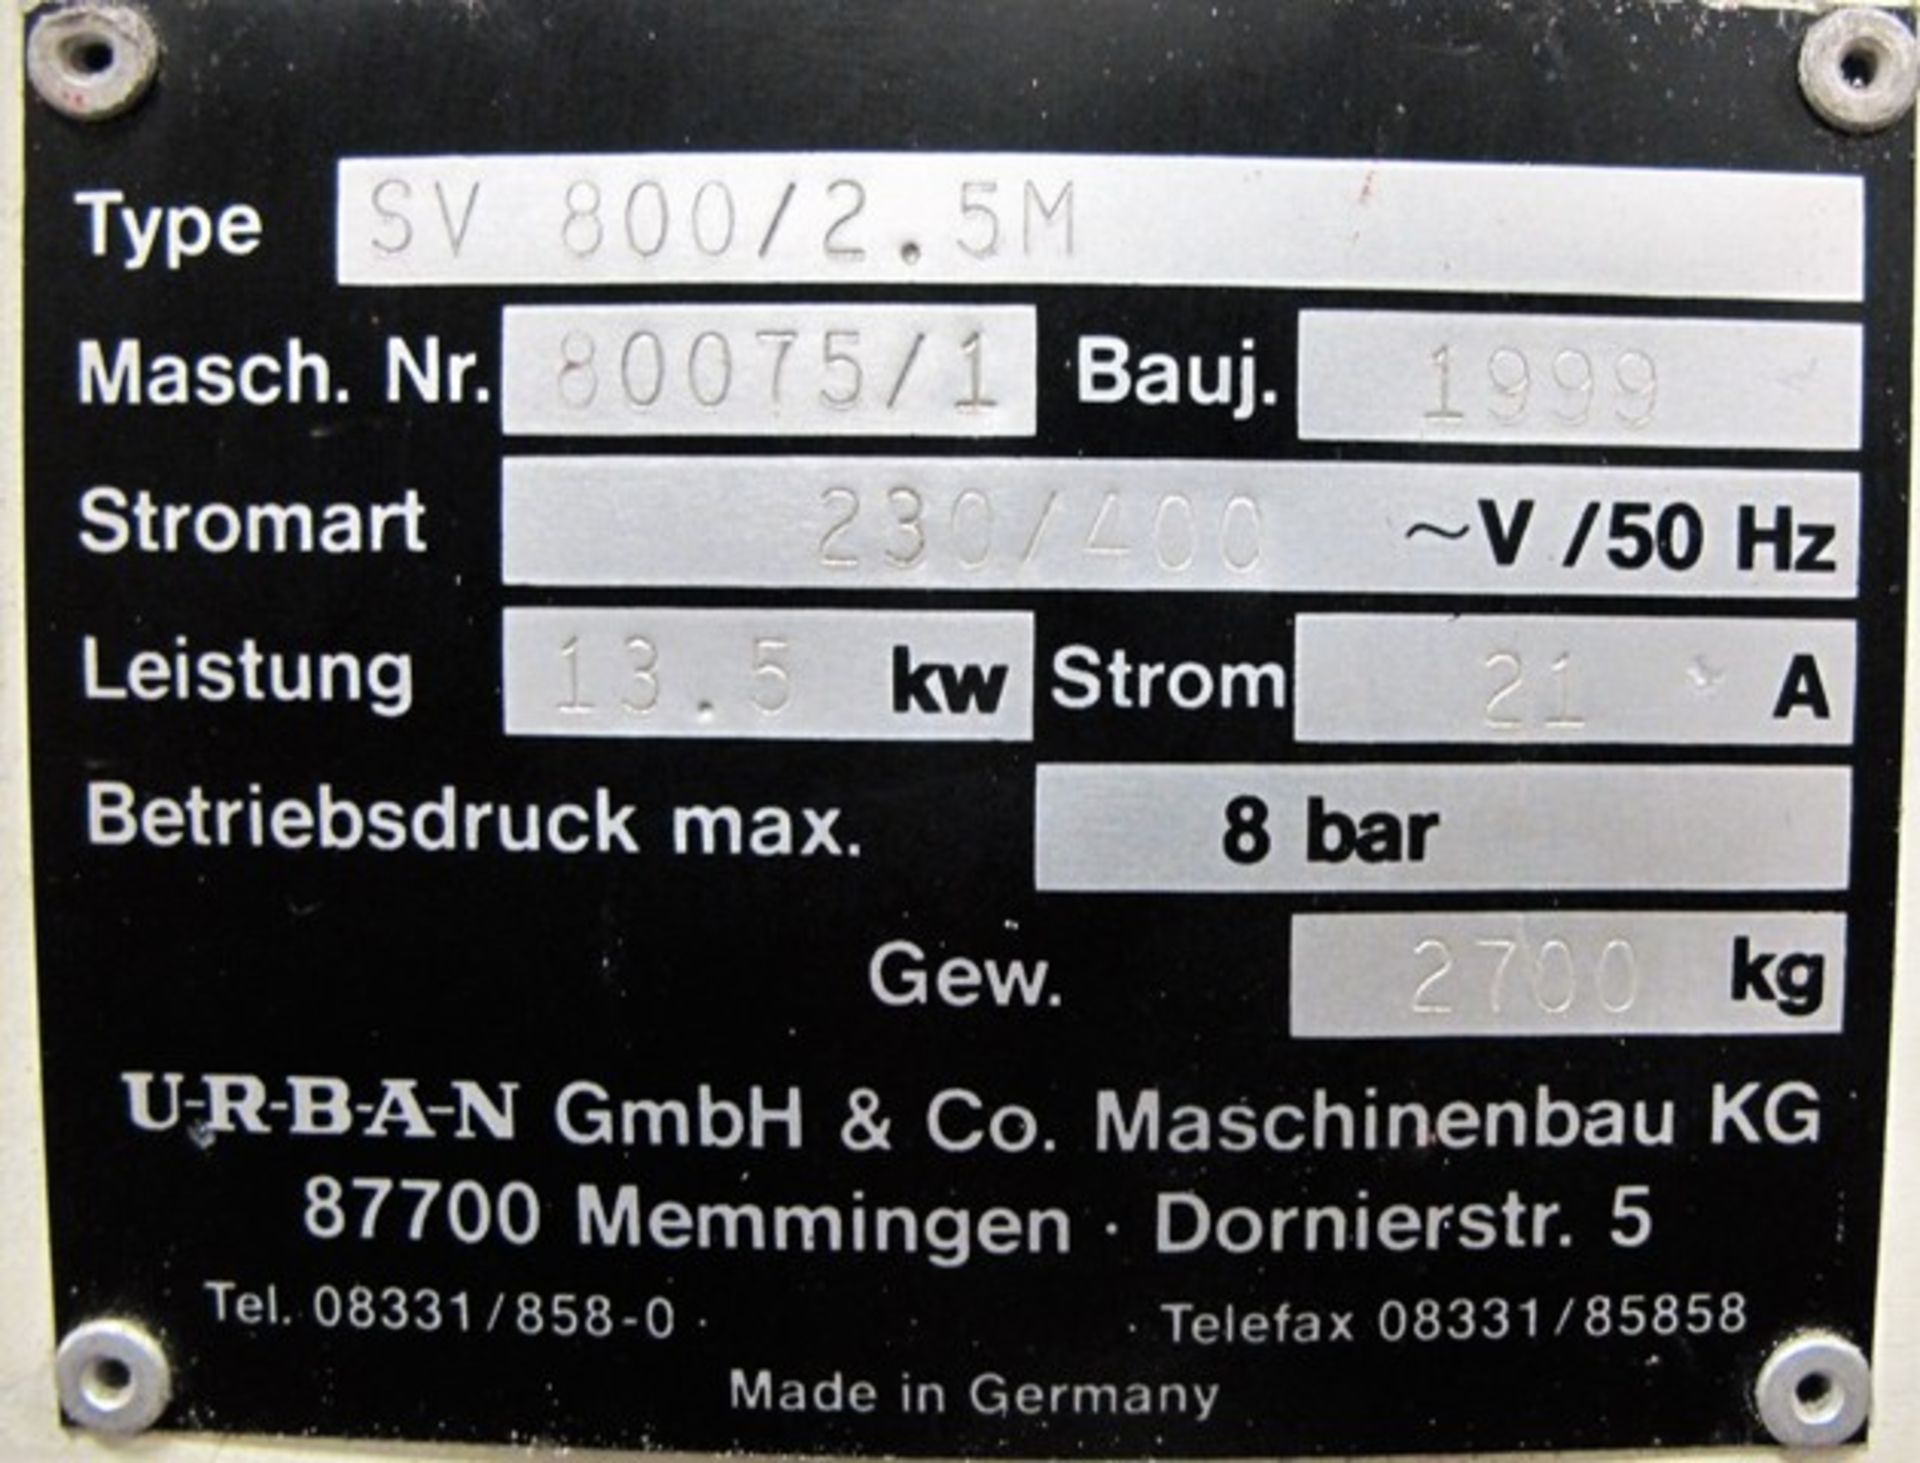 1999 URBAN MOD SV800-215M 4 CORNER CLEANER W/CONTROL PANEL, S/N 80075/1 - Image 3 of 11